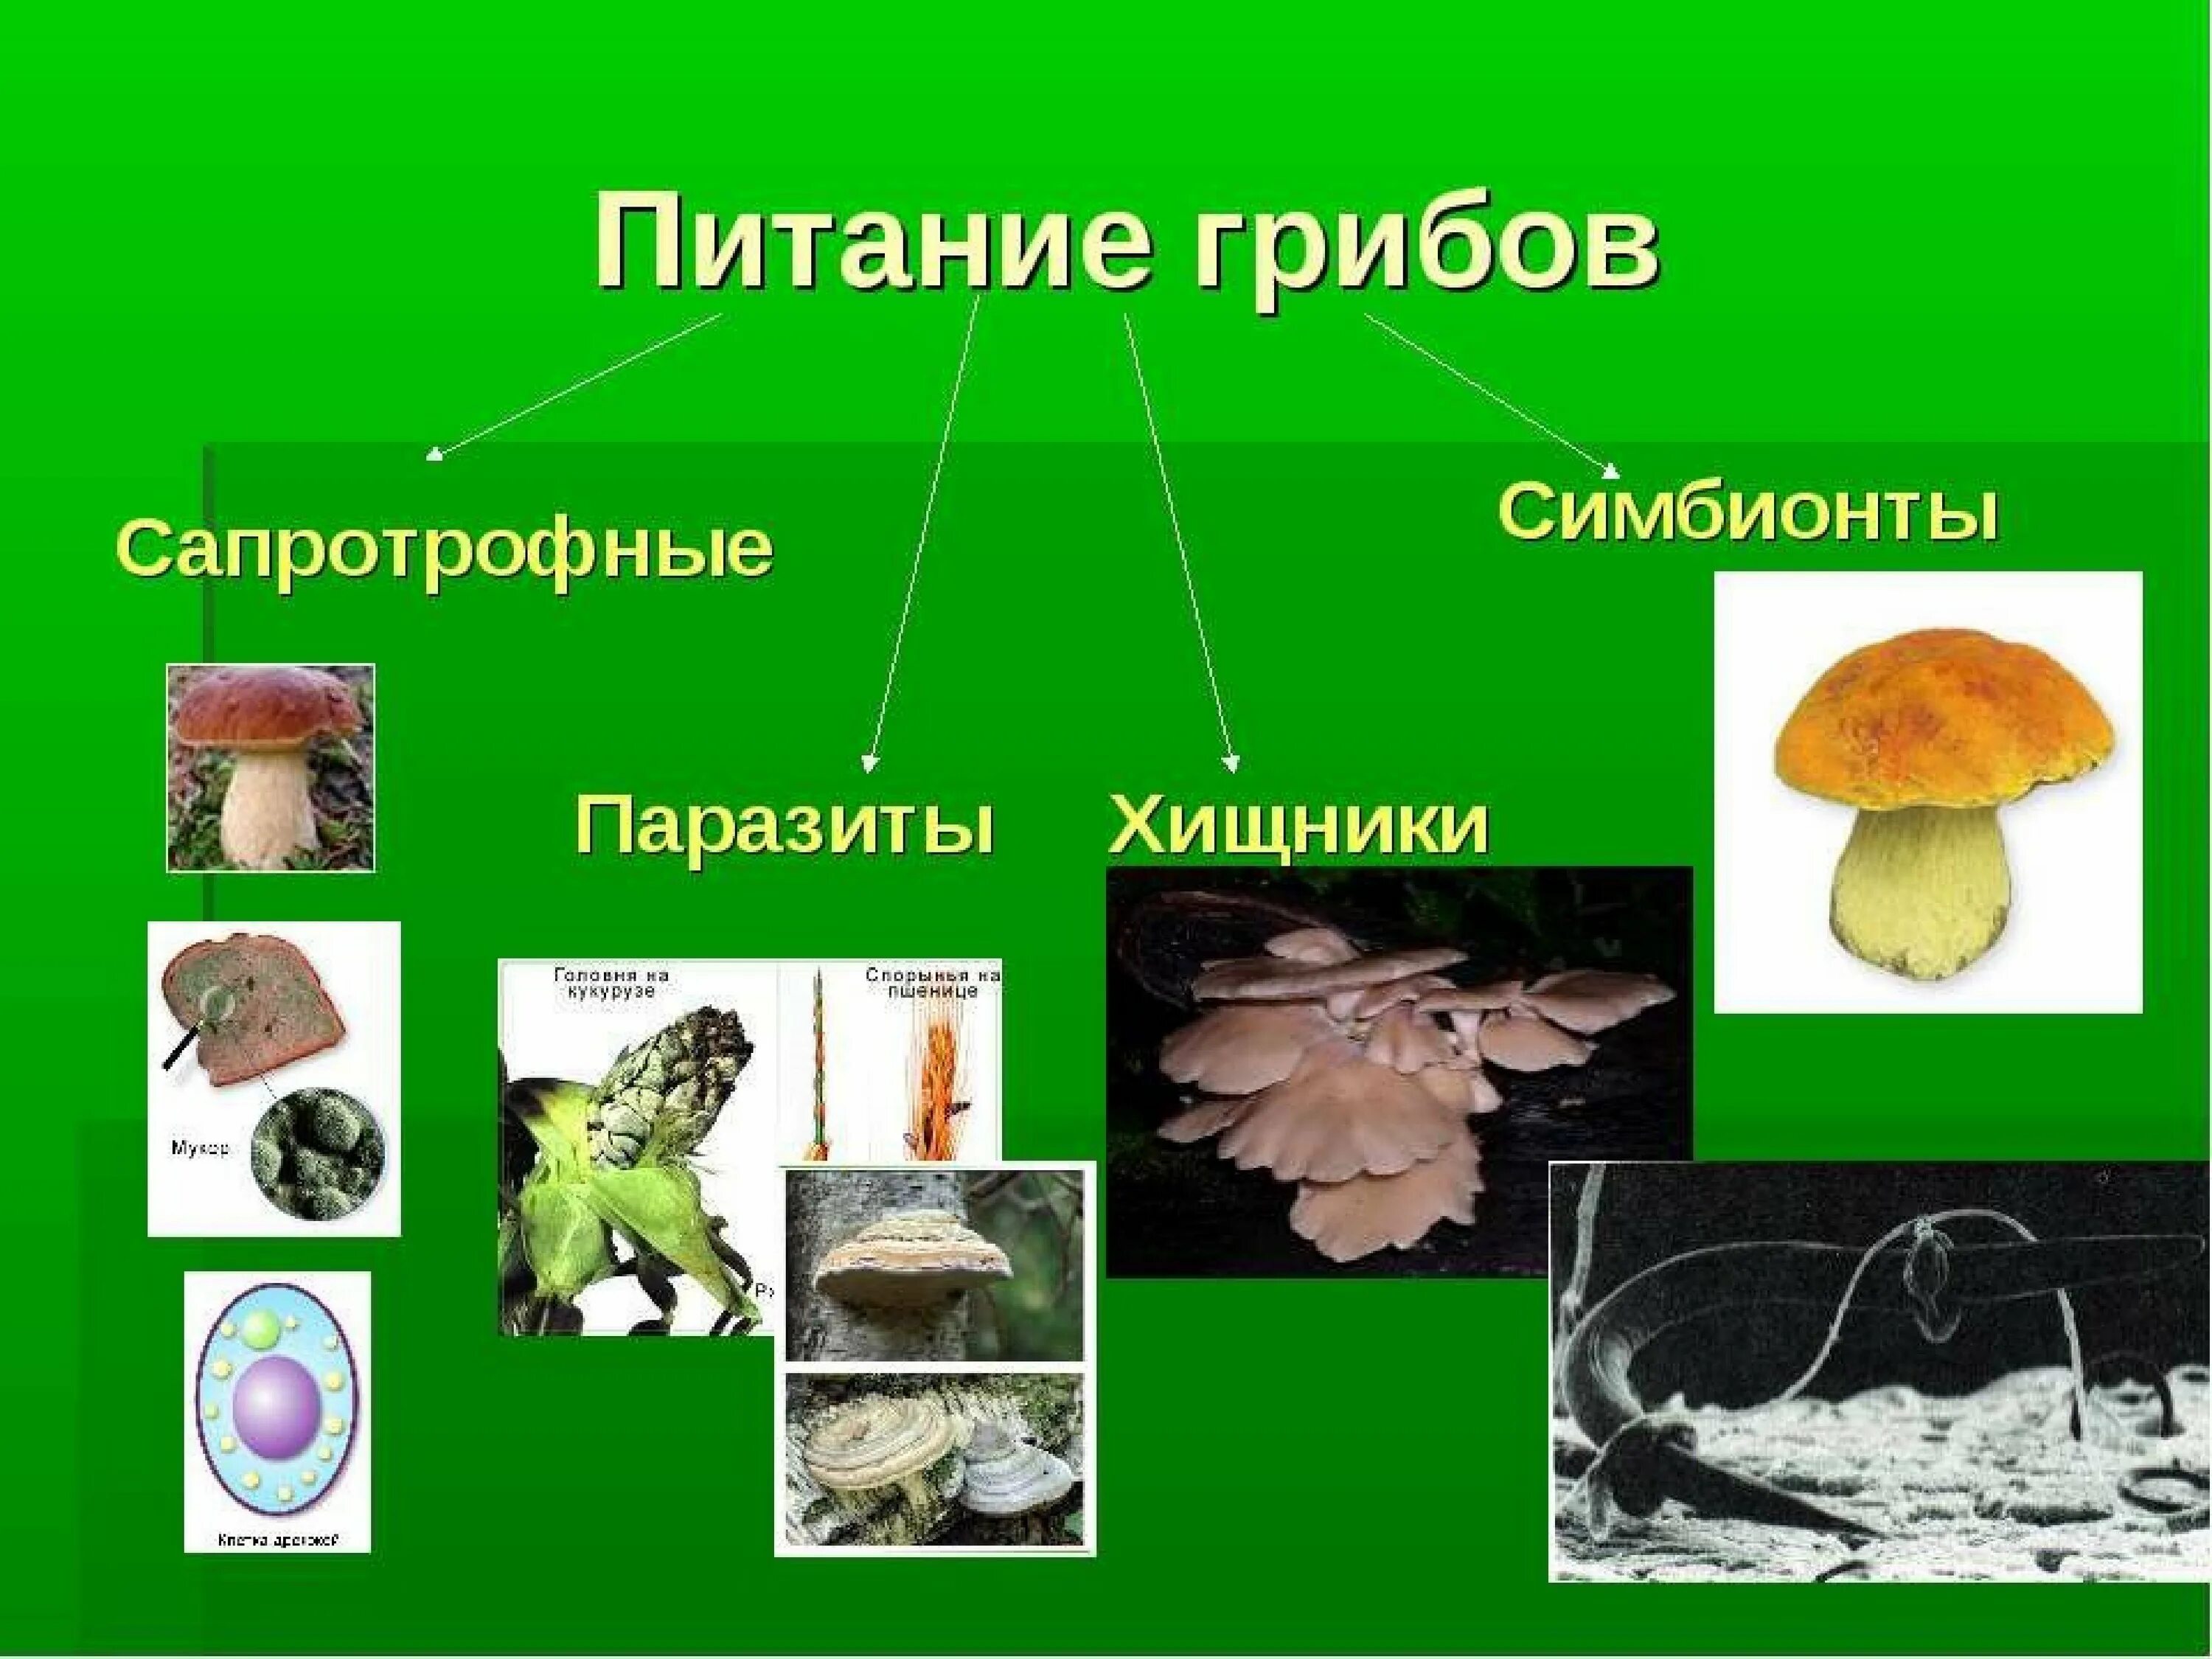 Типы питания грибов сапротрофы паразиты симбионты и хищники. Типы питания грибов 5 класс биология. Схема питания грибов 6 класс. Питание грибов 5 класс.